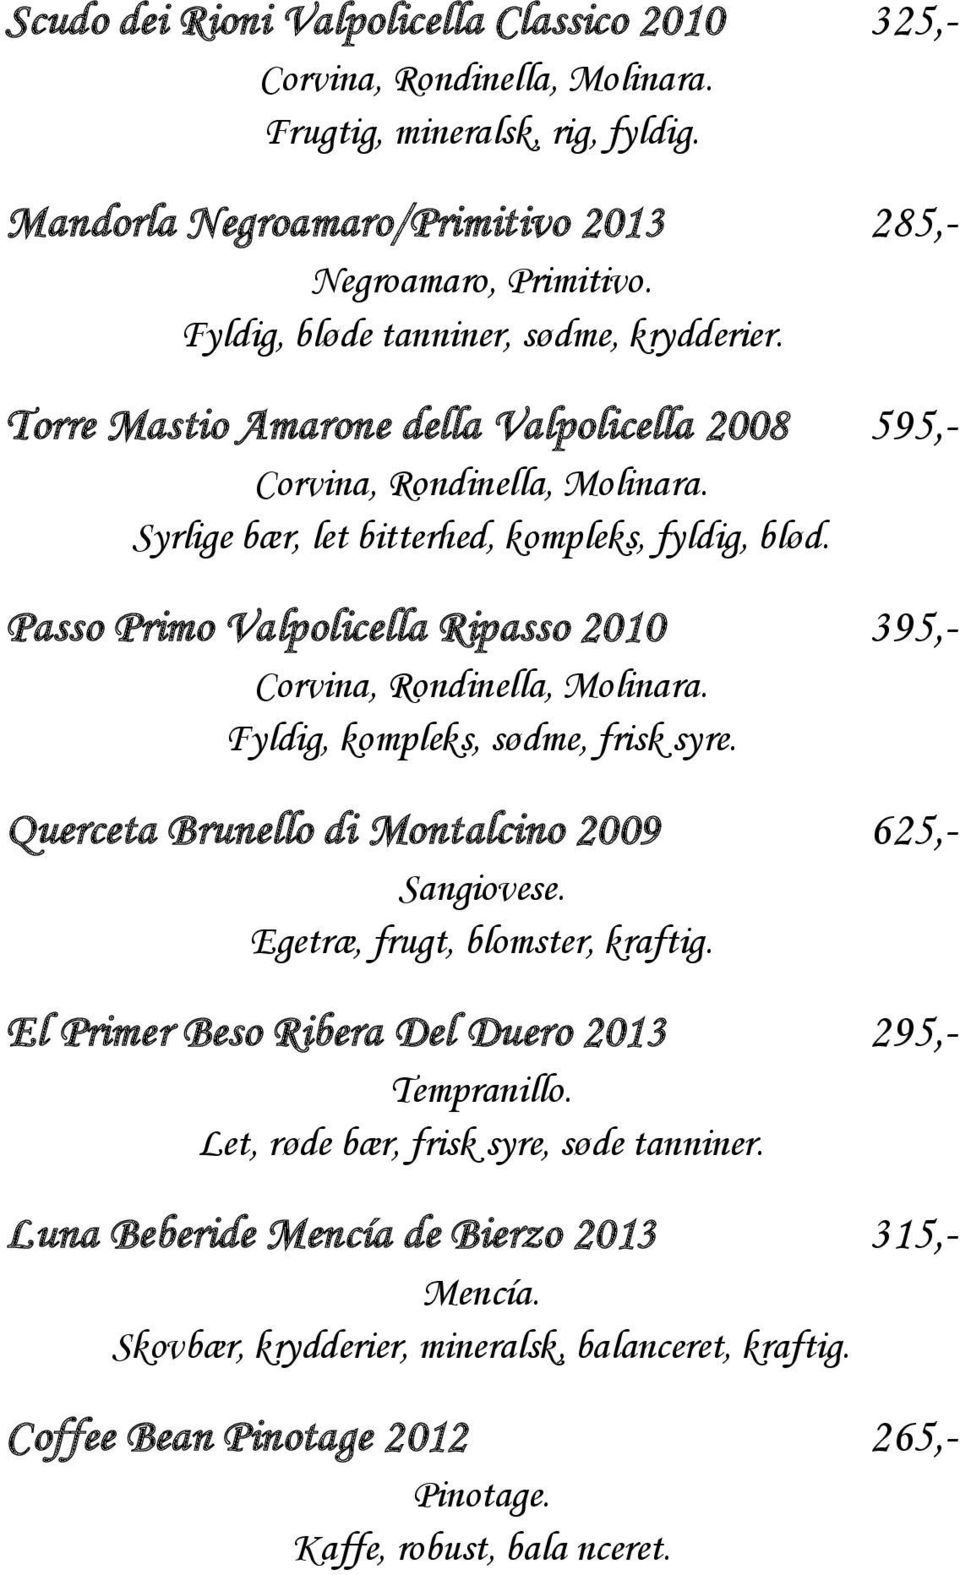 Passo Primo Valpolicella Ripasso 2010 395,- Corvina, Rondinella, Molinara. Fyldig, kompleks, sødme, frisk syre. Querceta Brunello di Montalcino 2009 625,- Sangiovese. Egetræ, frugt, blomster, kraftig.